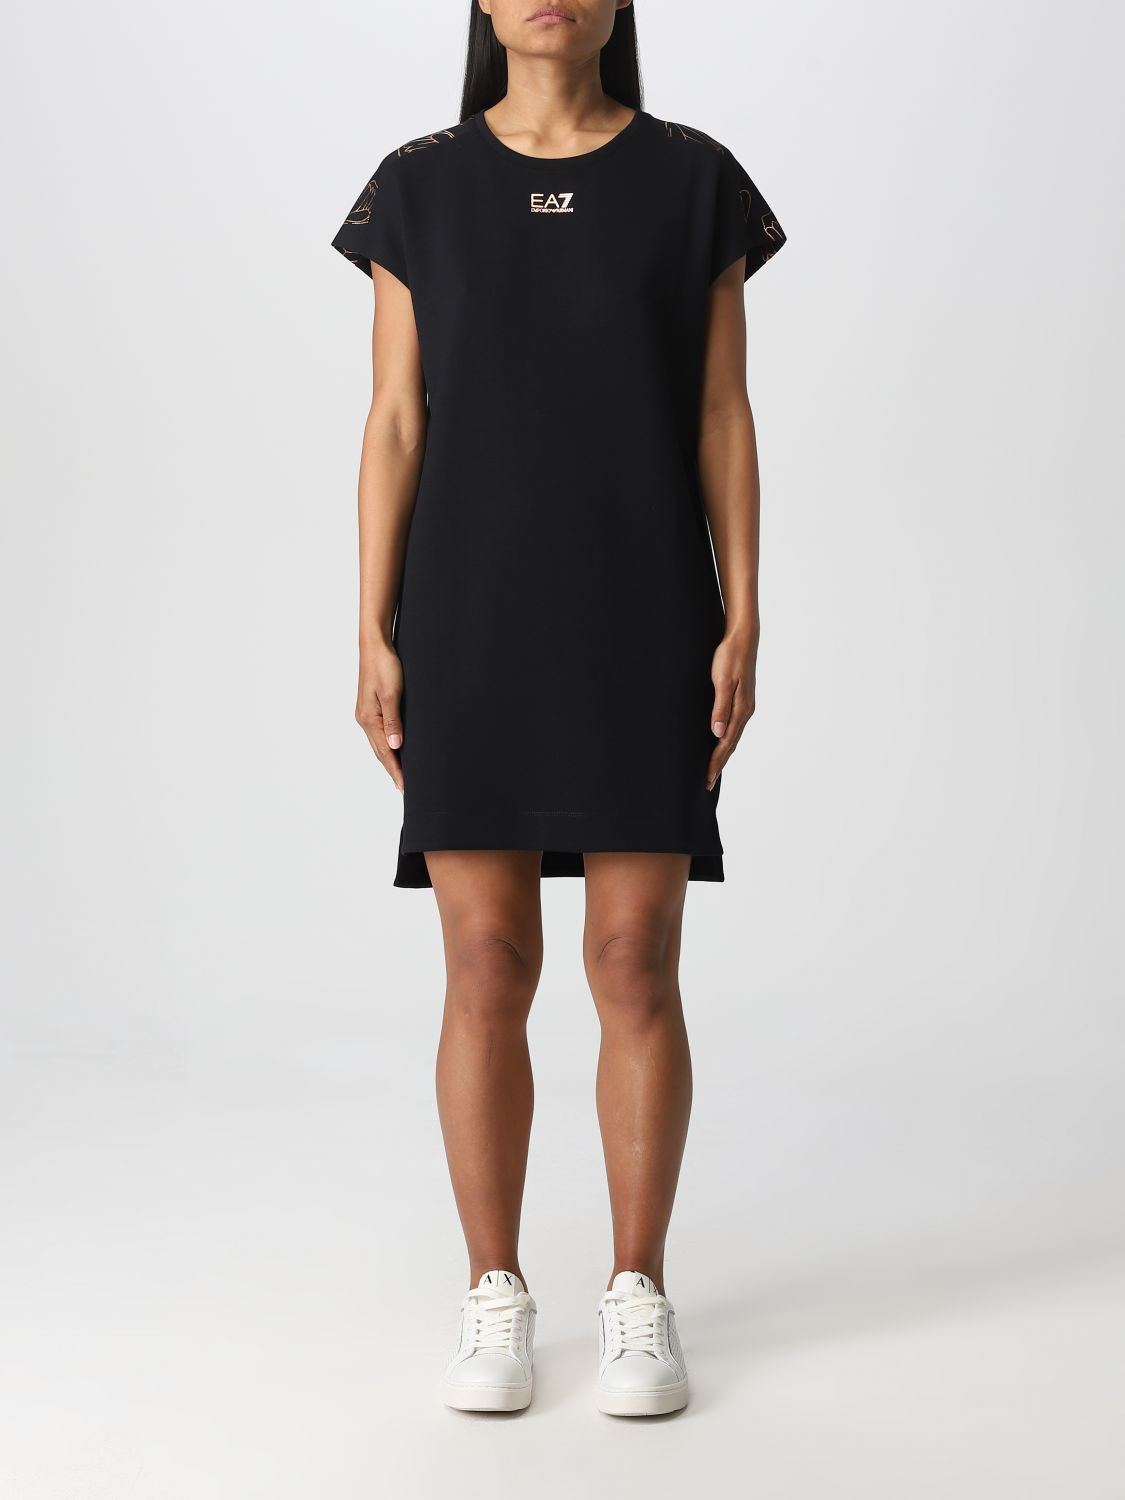 EA7: dress for woman - Black | Ea7 dress 3RTA54TJLQZ online on GIGLIO.COM